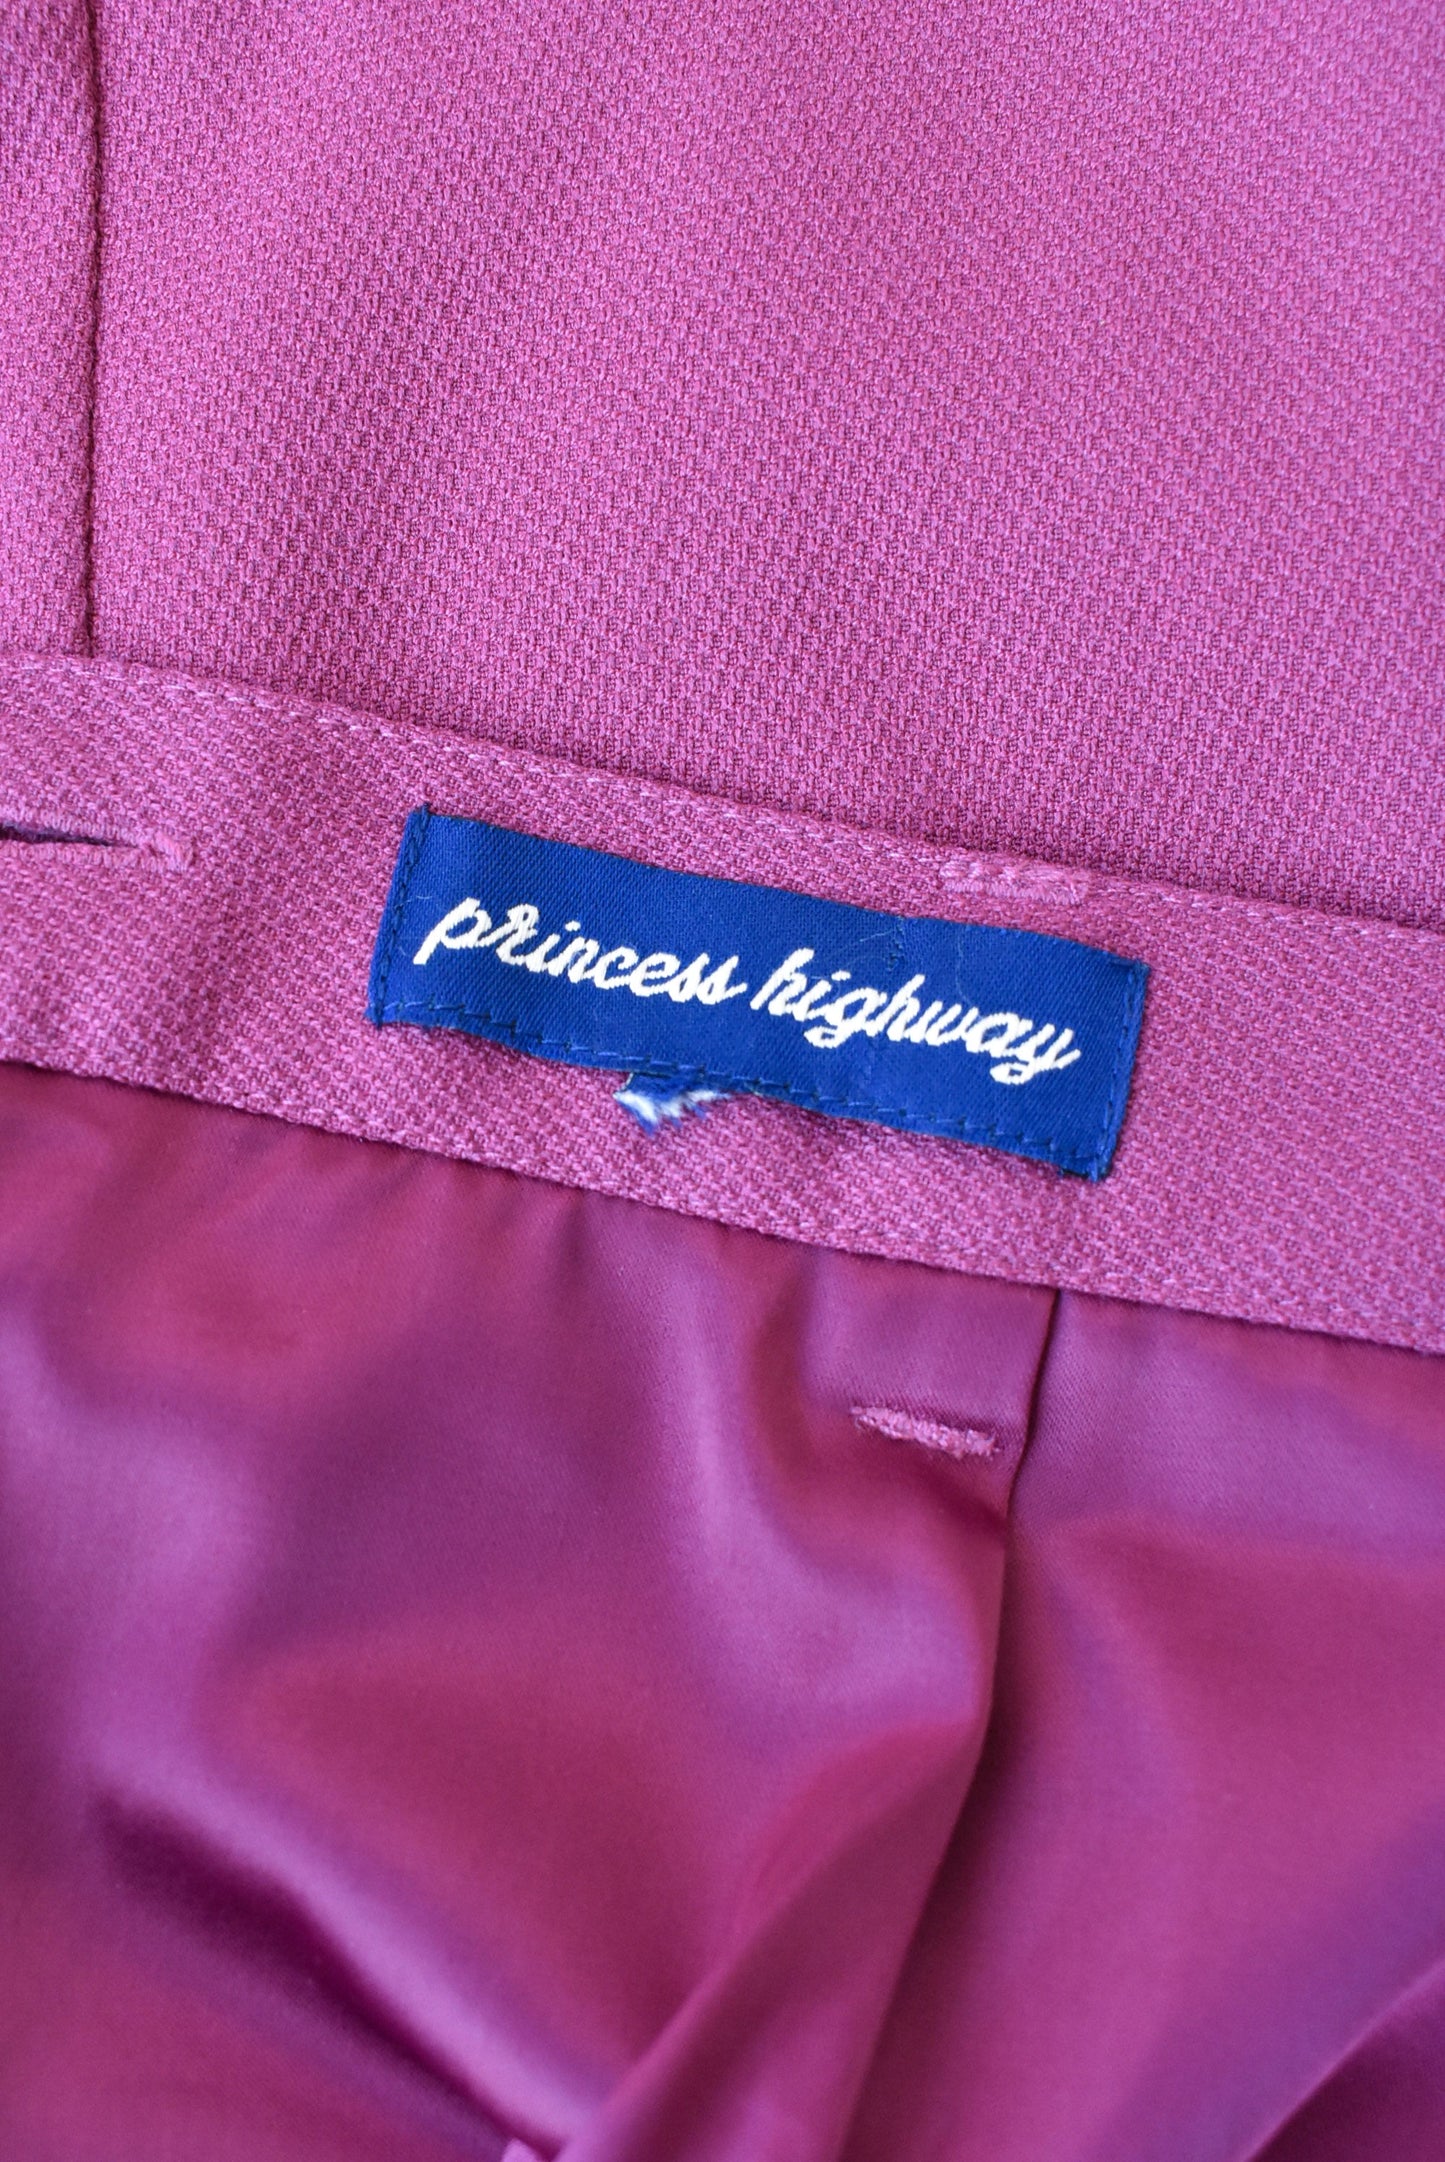 Princess Highway cherry pink miniskirt, size S-M